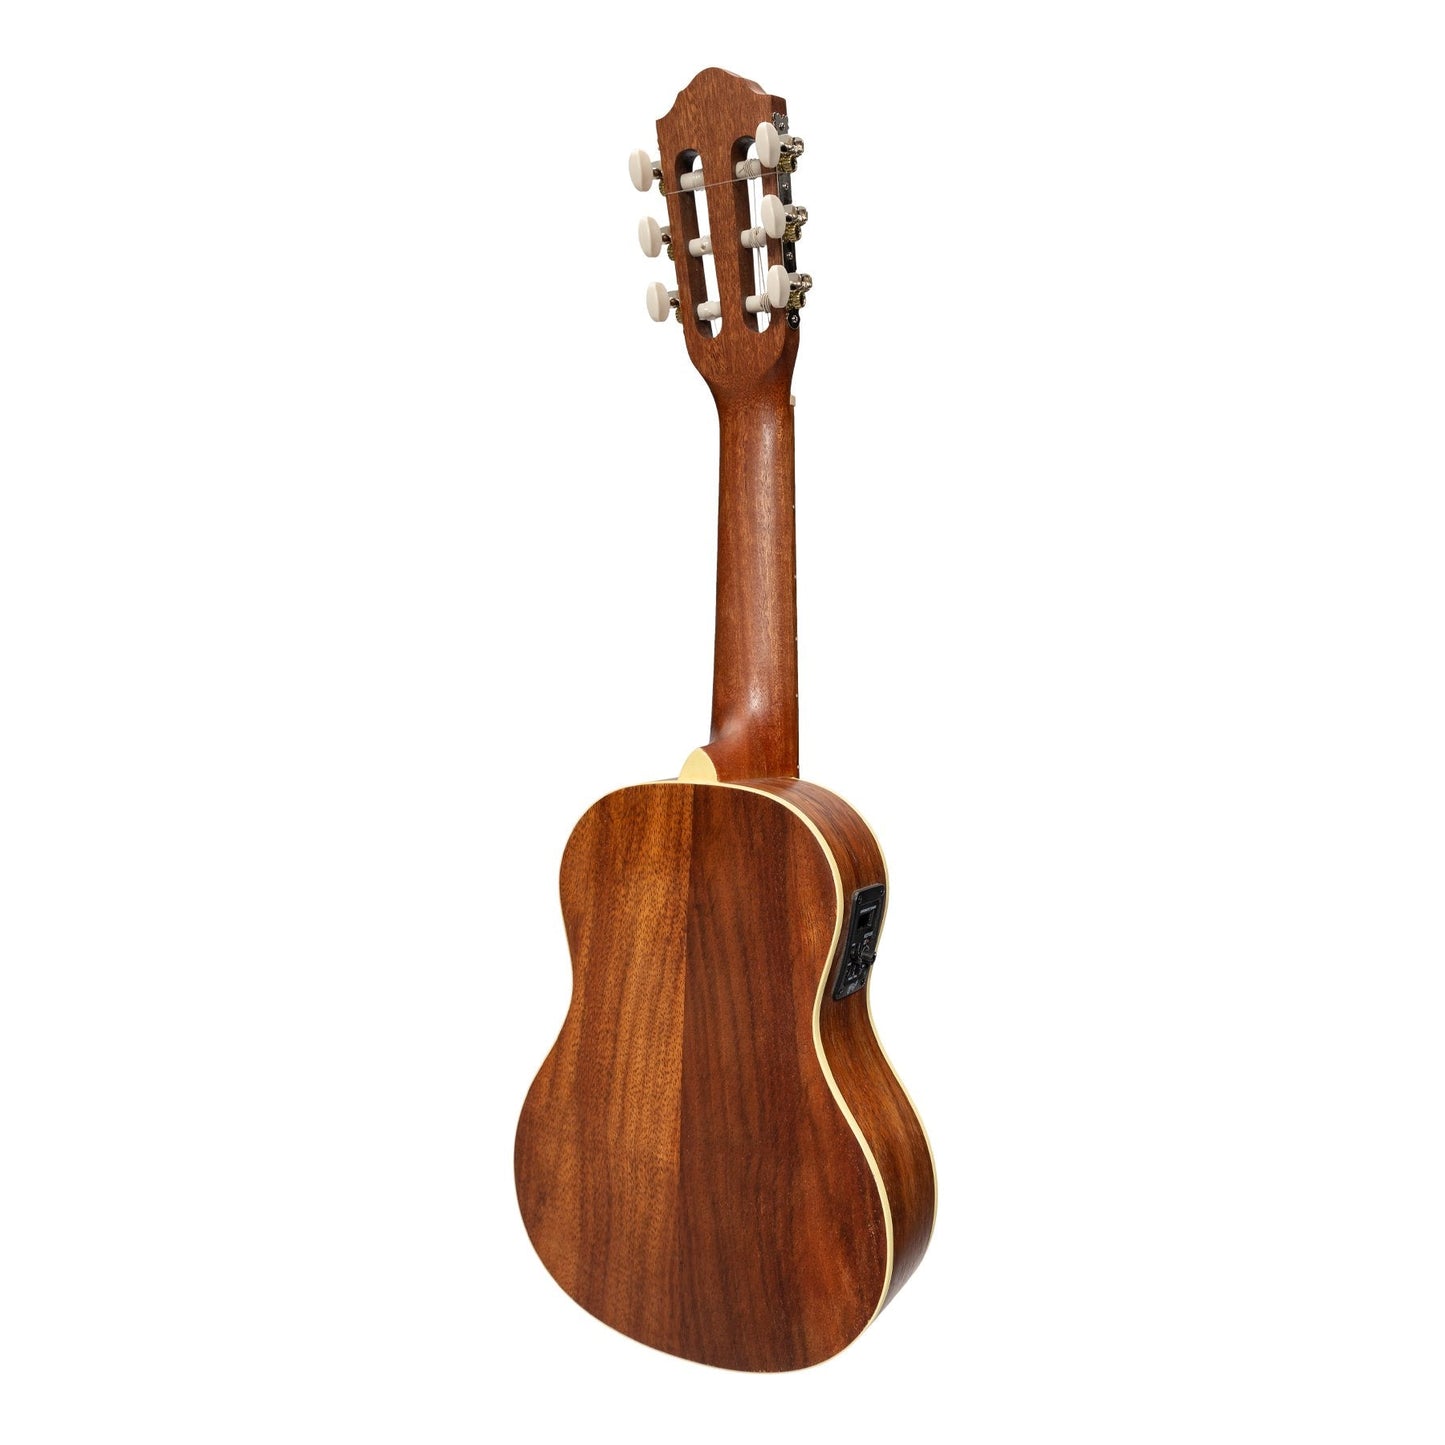 Mojo 'Guitarulele' 1/4 Size Classical Guitar with Pickup (Rosewood)